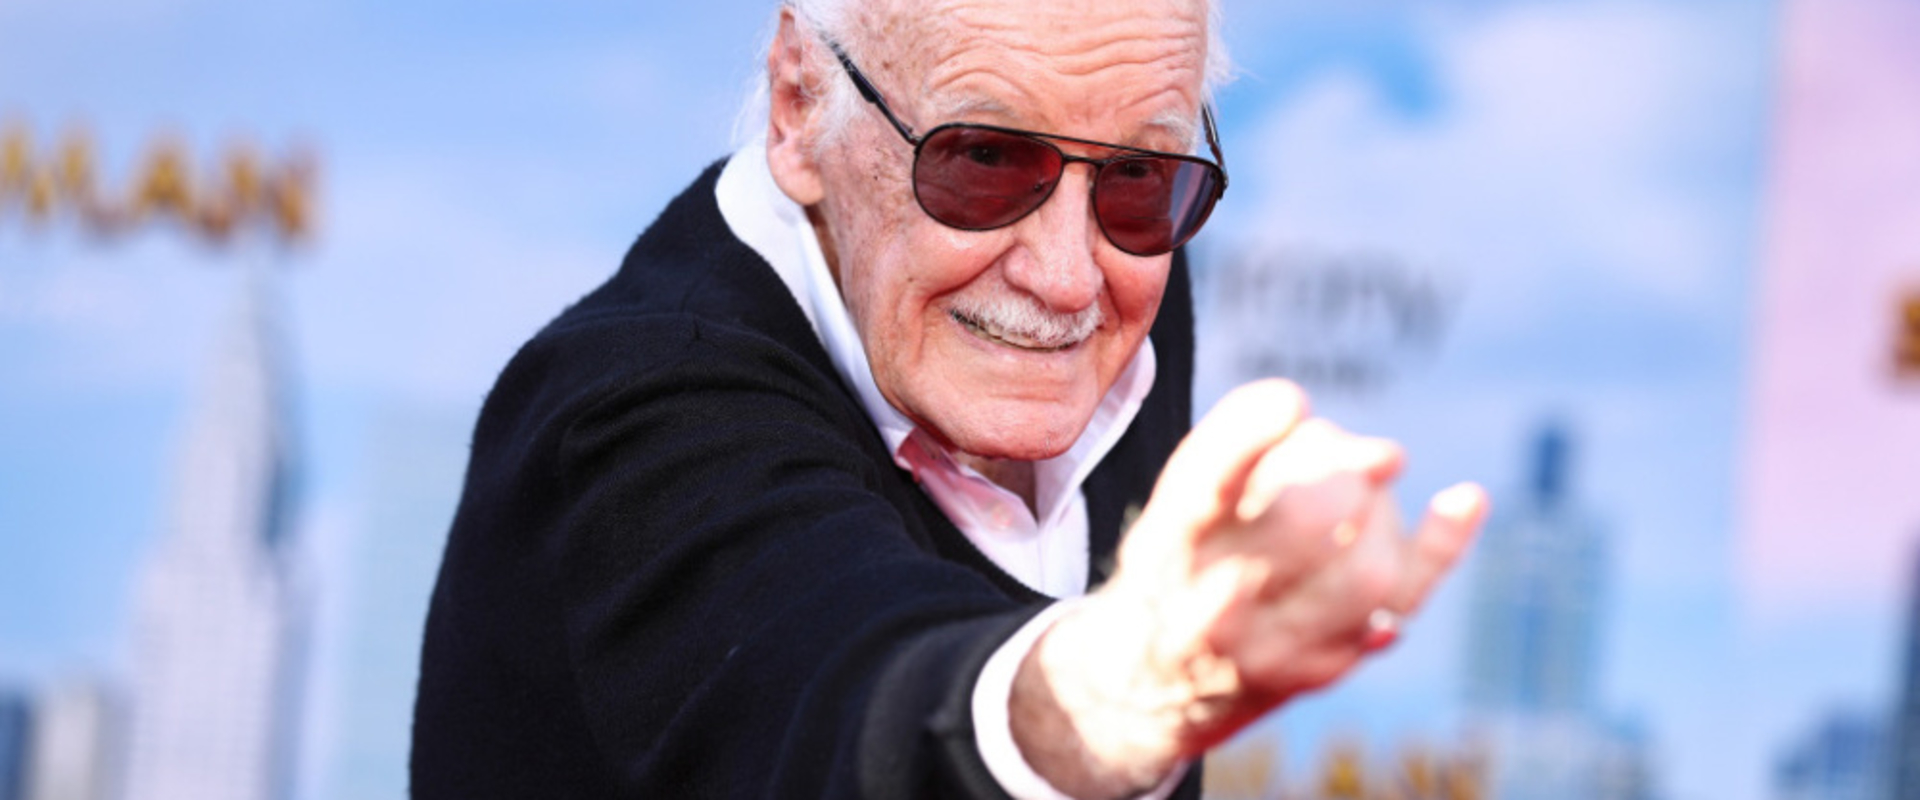 Itt hagyott minket a Marvel atyja, elhunyt Stan Lee!